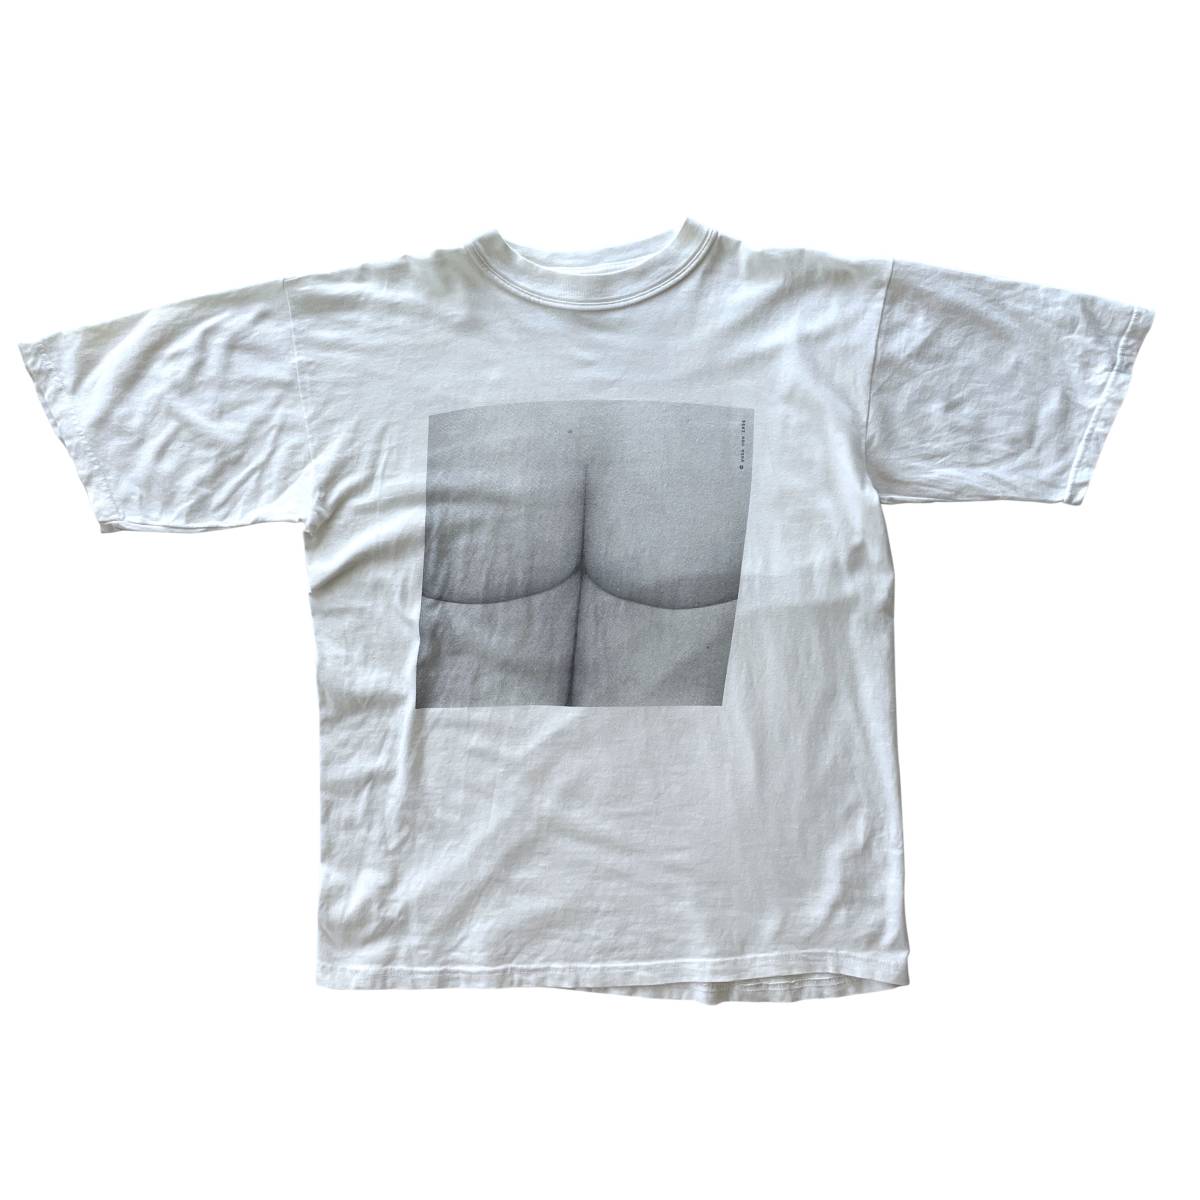 【Vintage】YOKO ONO Tシャツ A Celebration of Being Human オノ・ヨーコ 1994年